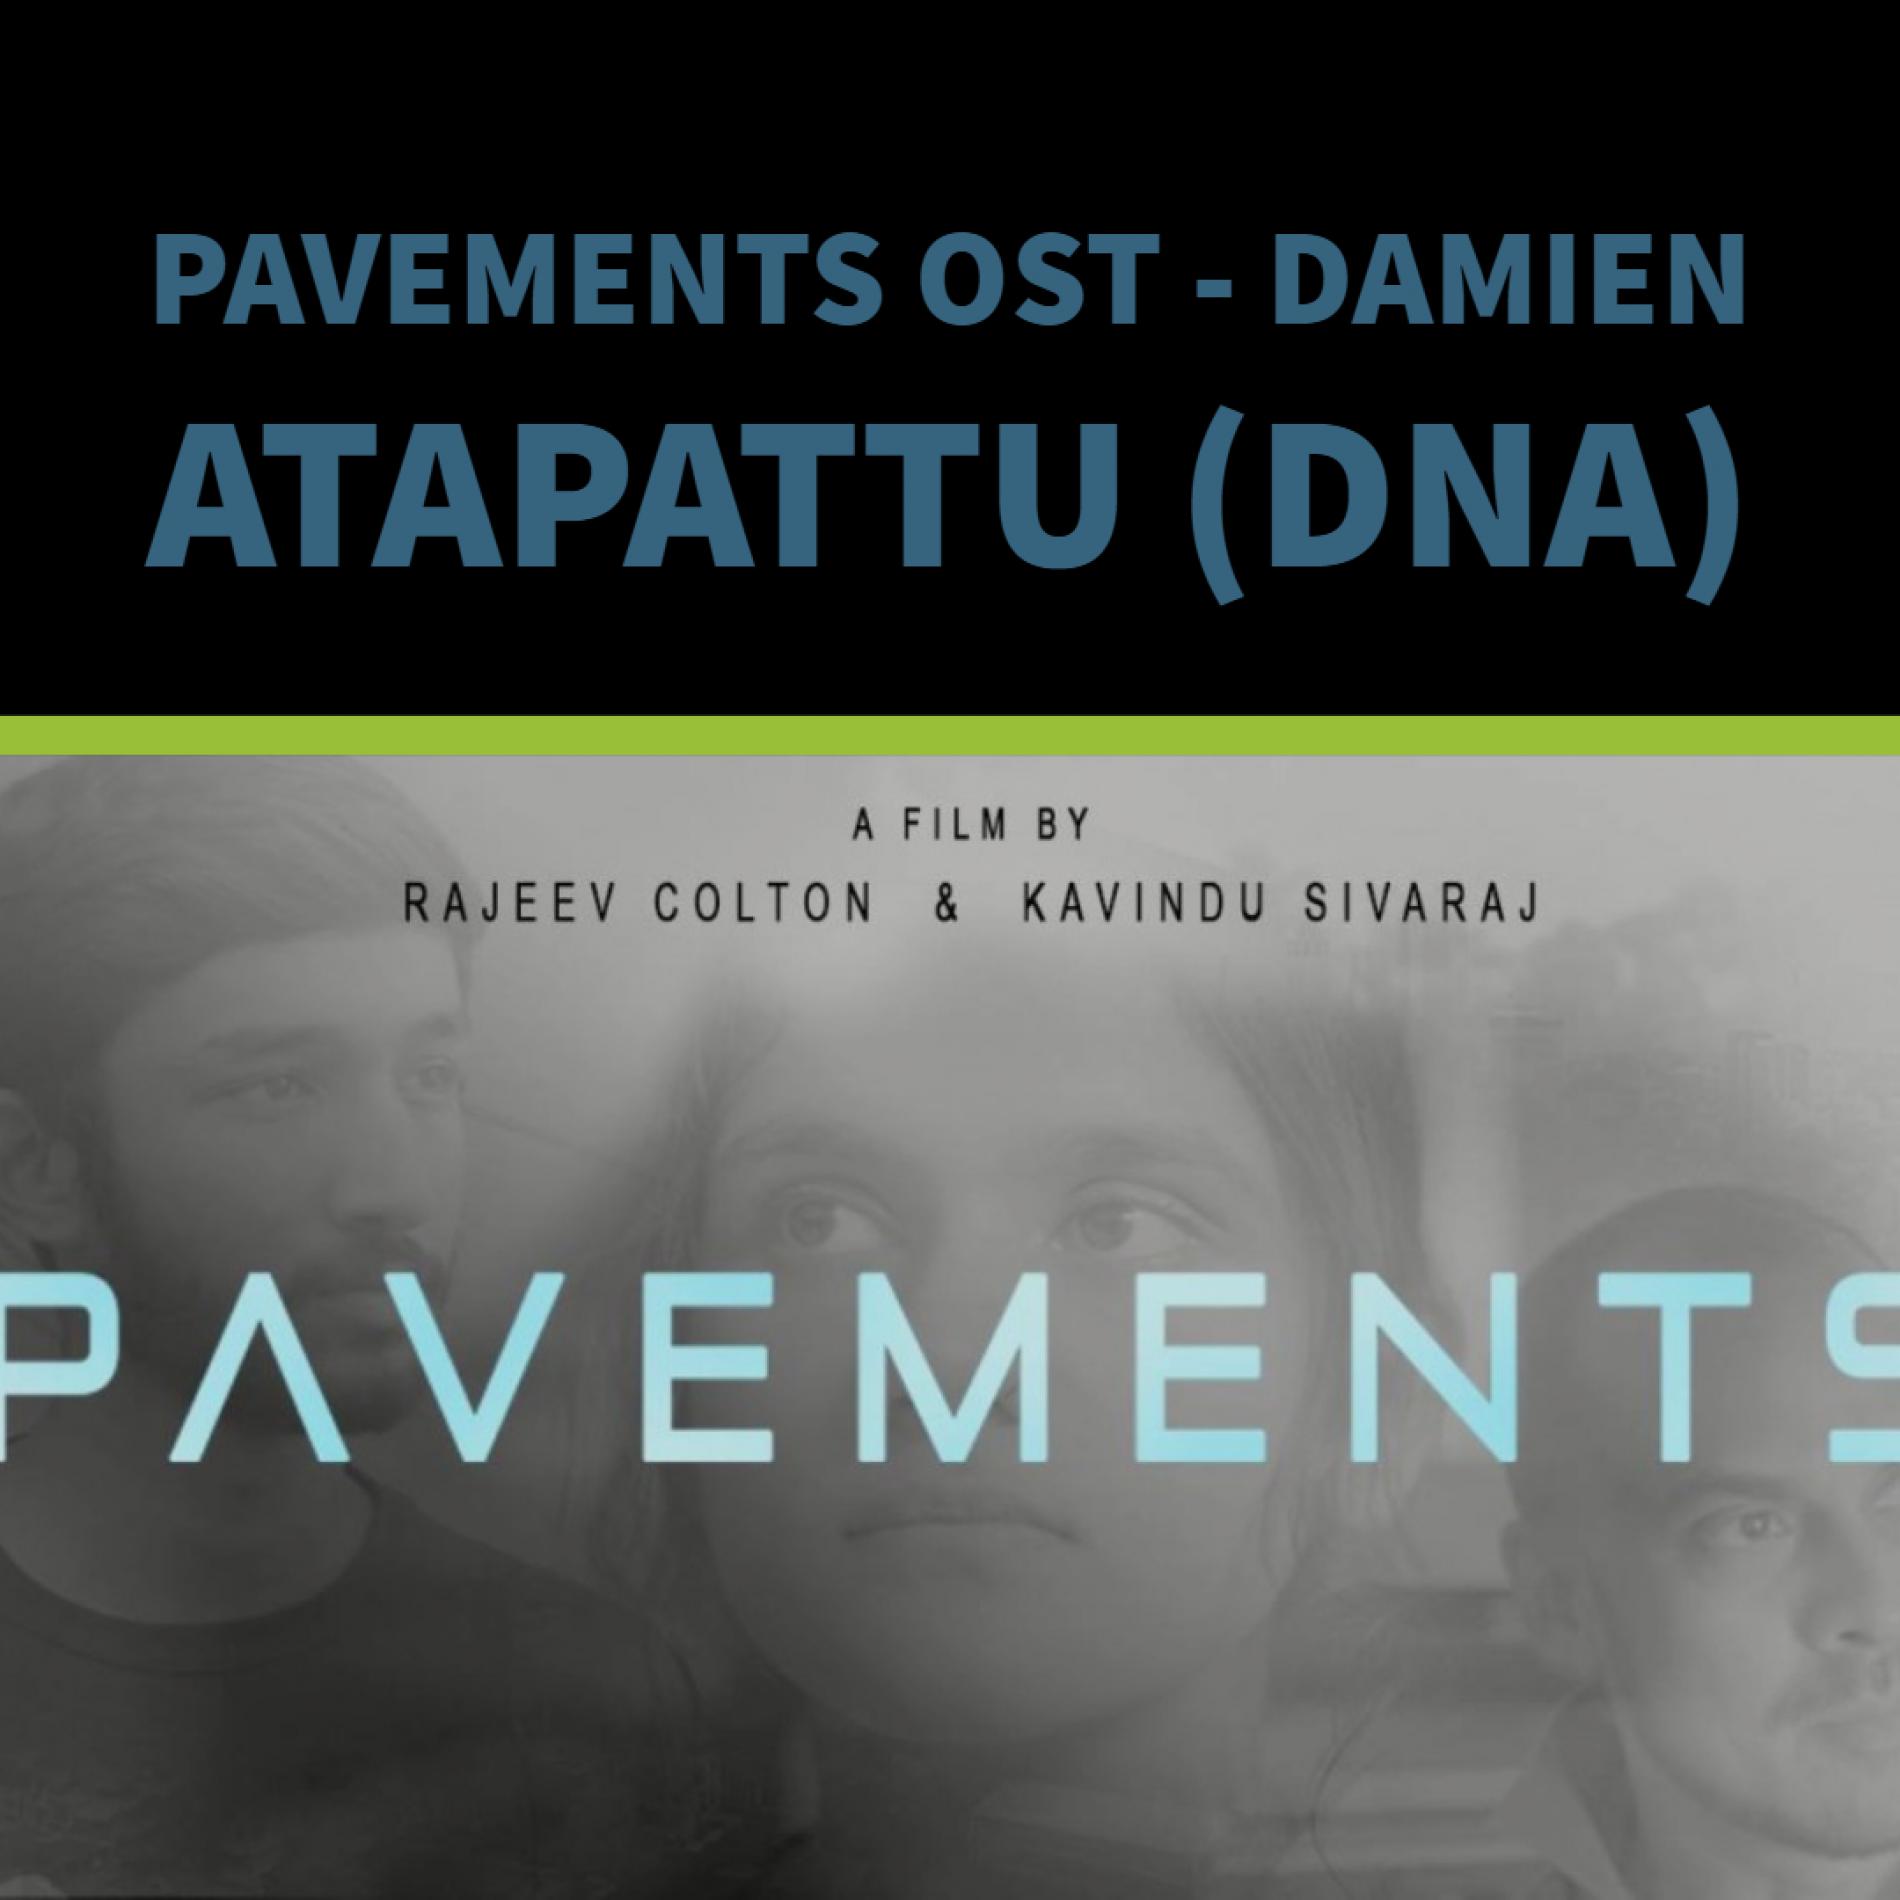 Damien Atapattu (DNA) – Pavements OST